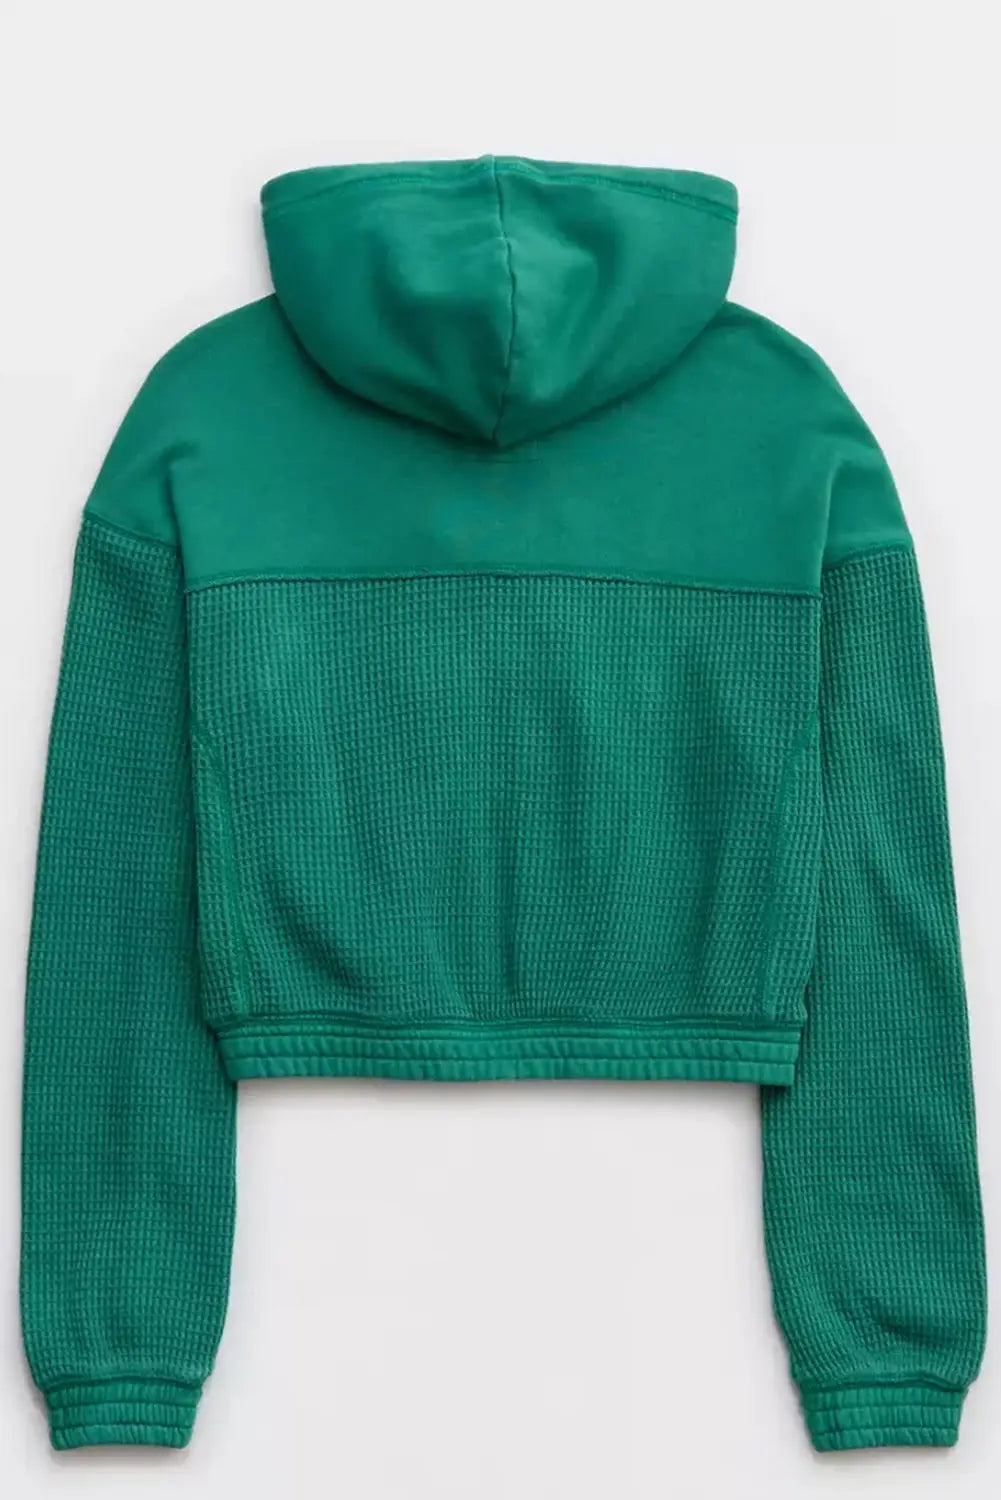 Blackish green waffle knit hooded jacket and shorts outfit - sets